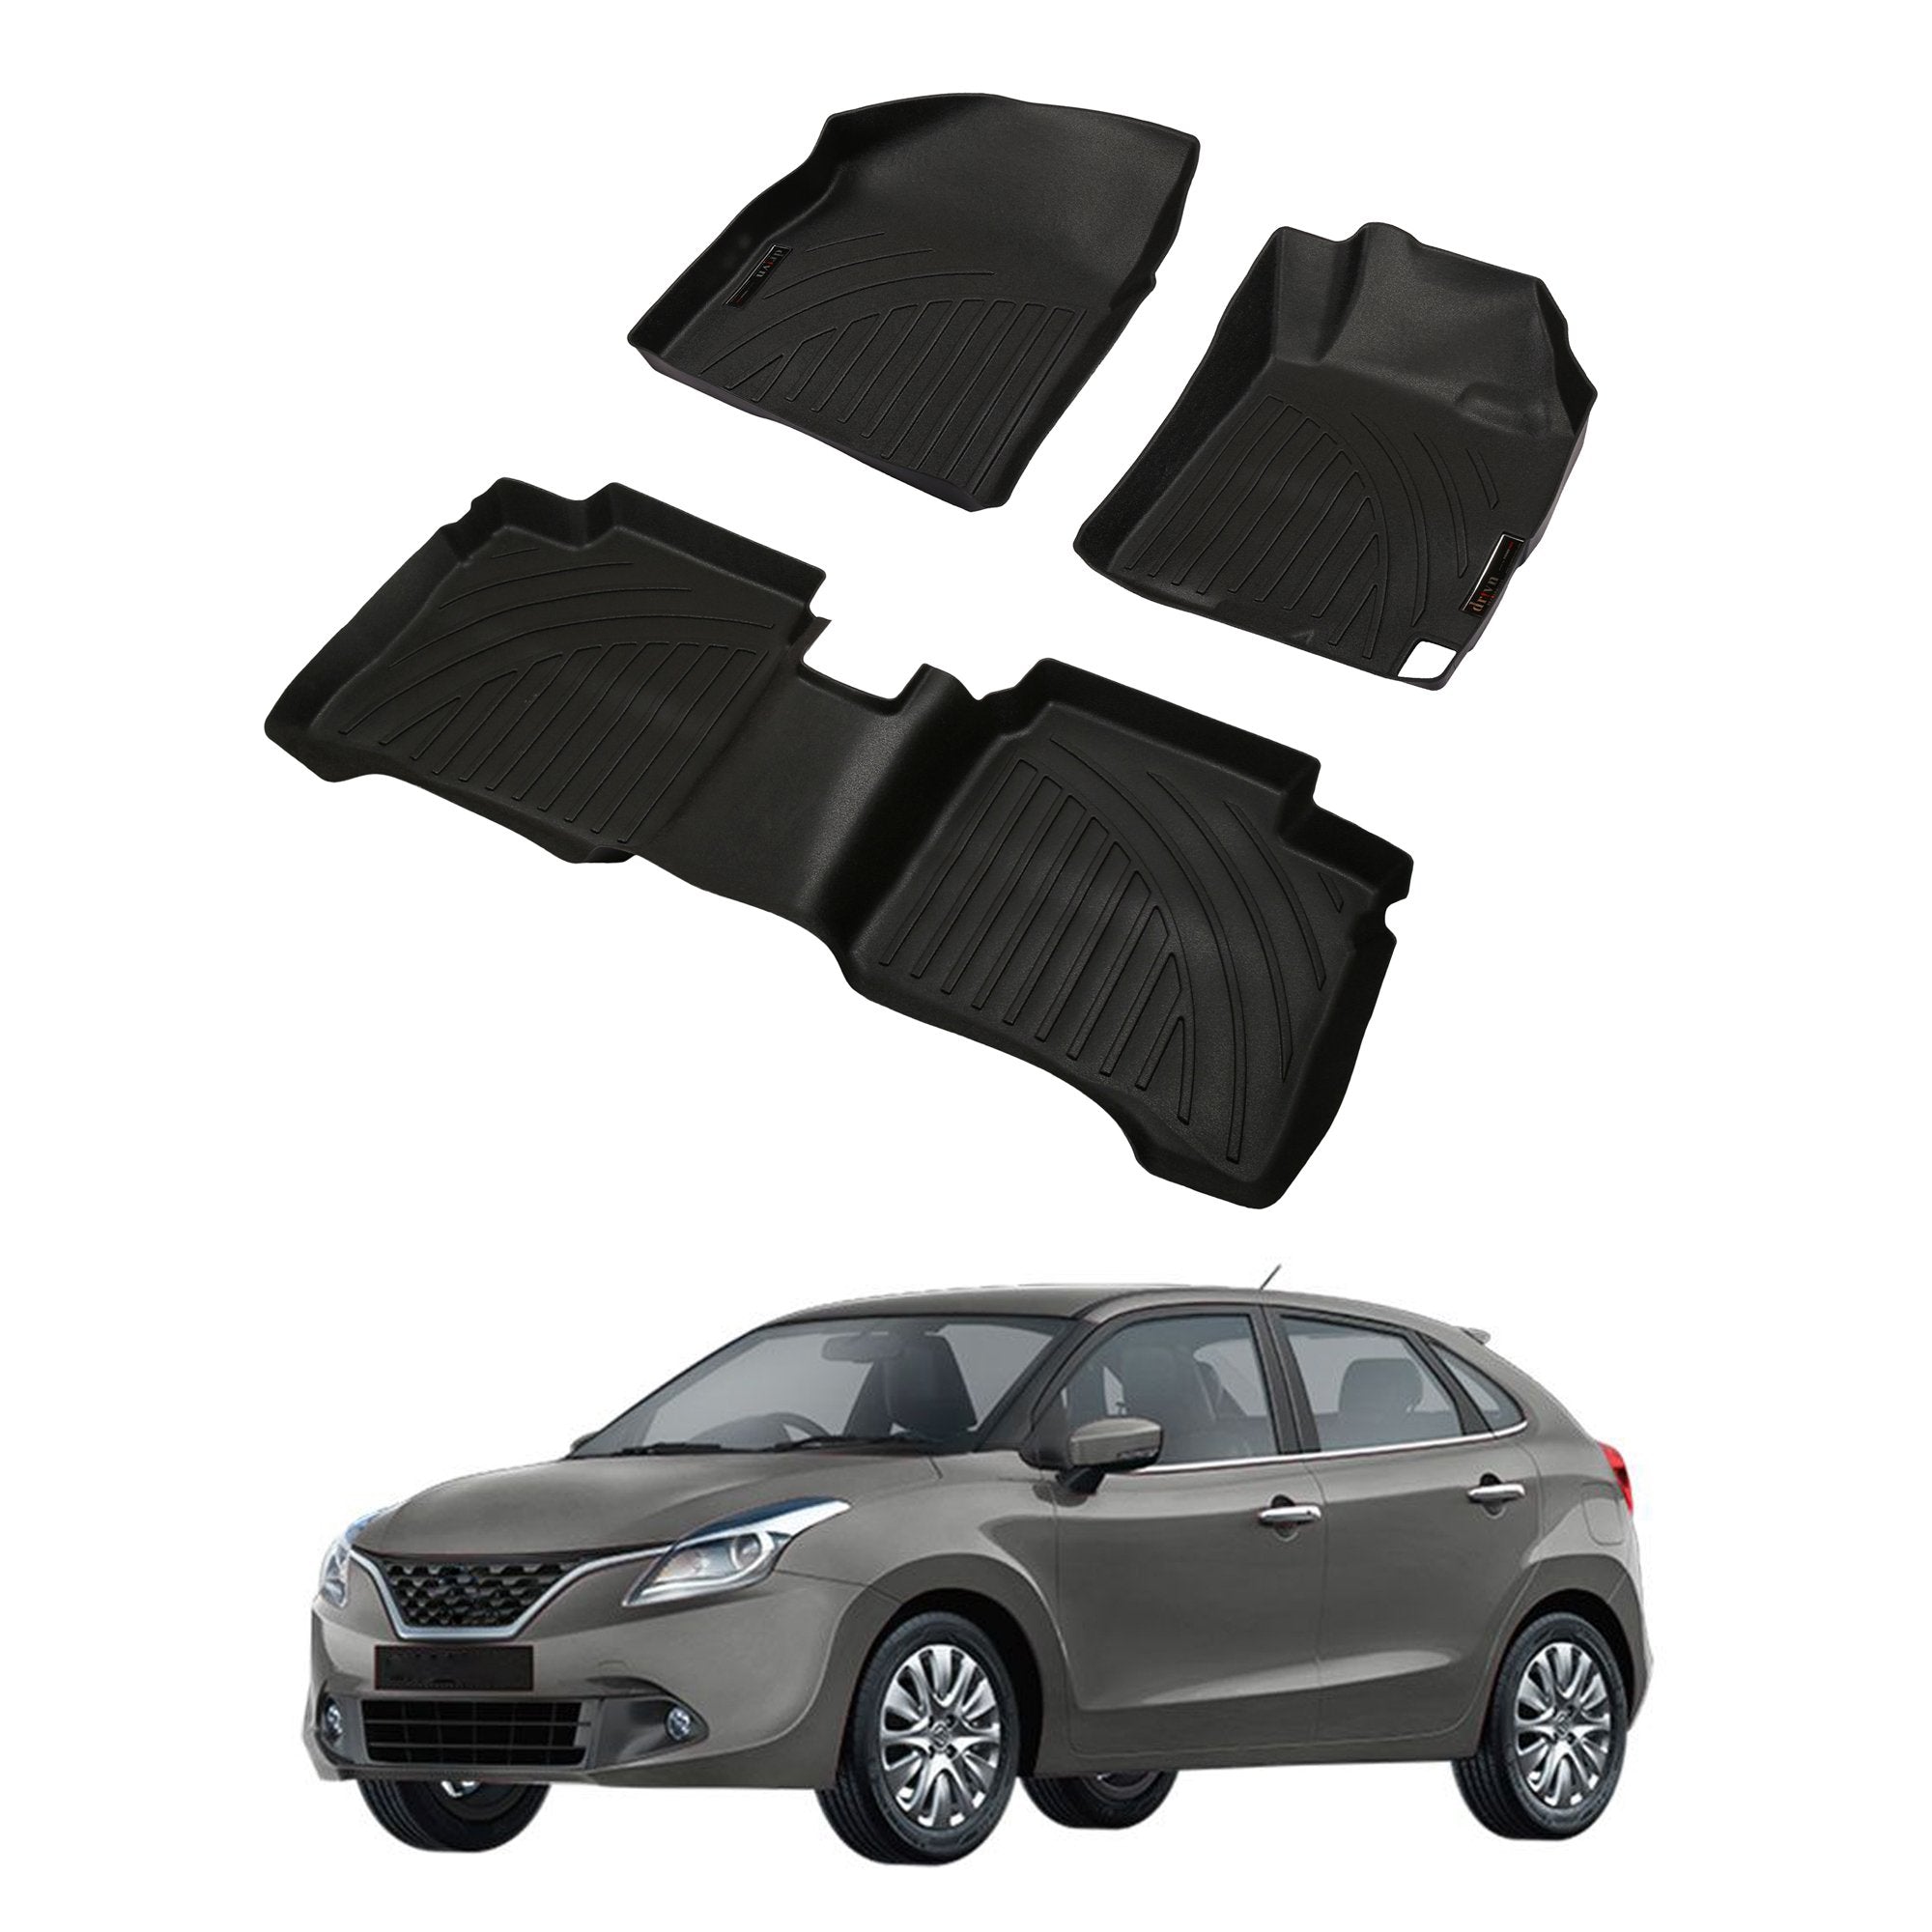 Drivn 5D TPV Car Foot Mat for Maruti Suzuki Baleno - Black, 5D Car Floor Mat, Customised Car Floor Mat for Maruti Suzuki Baleno (Set of 3) - CARMATE®